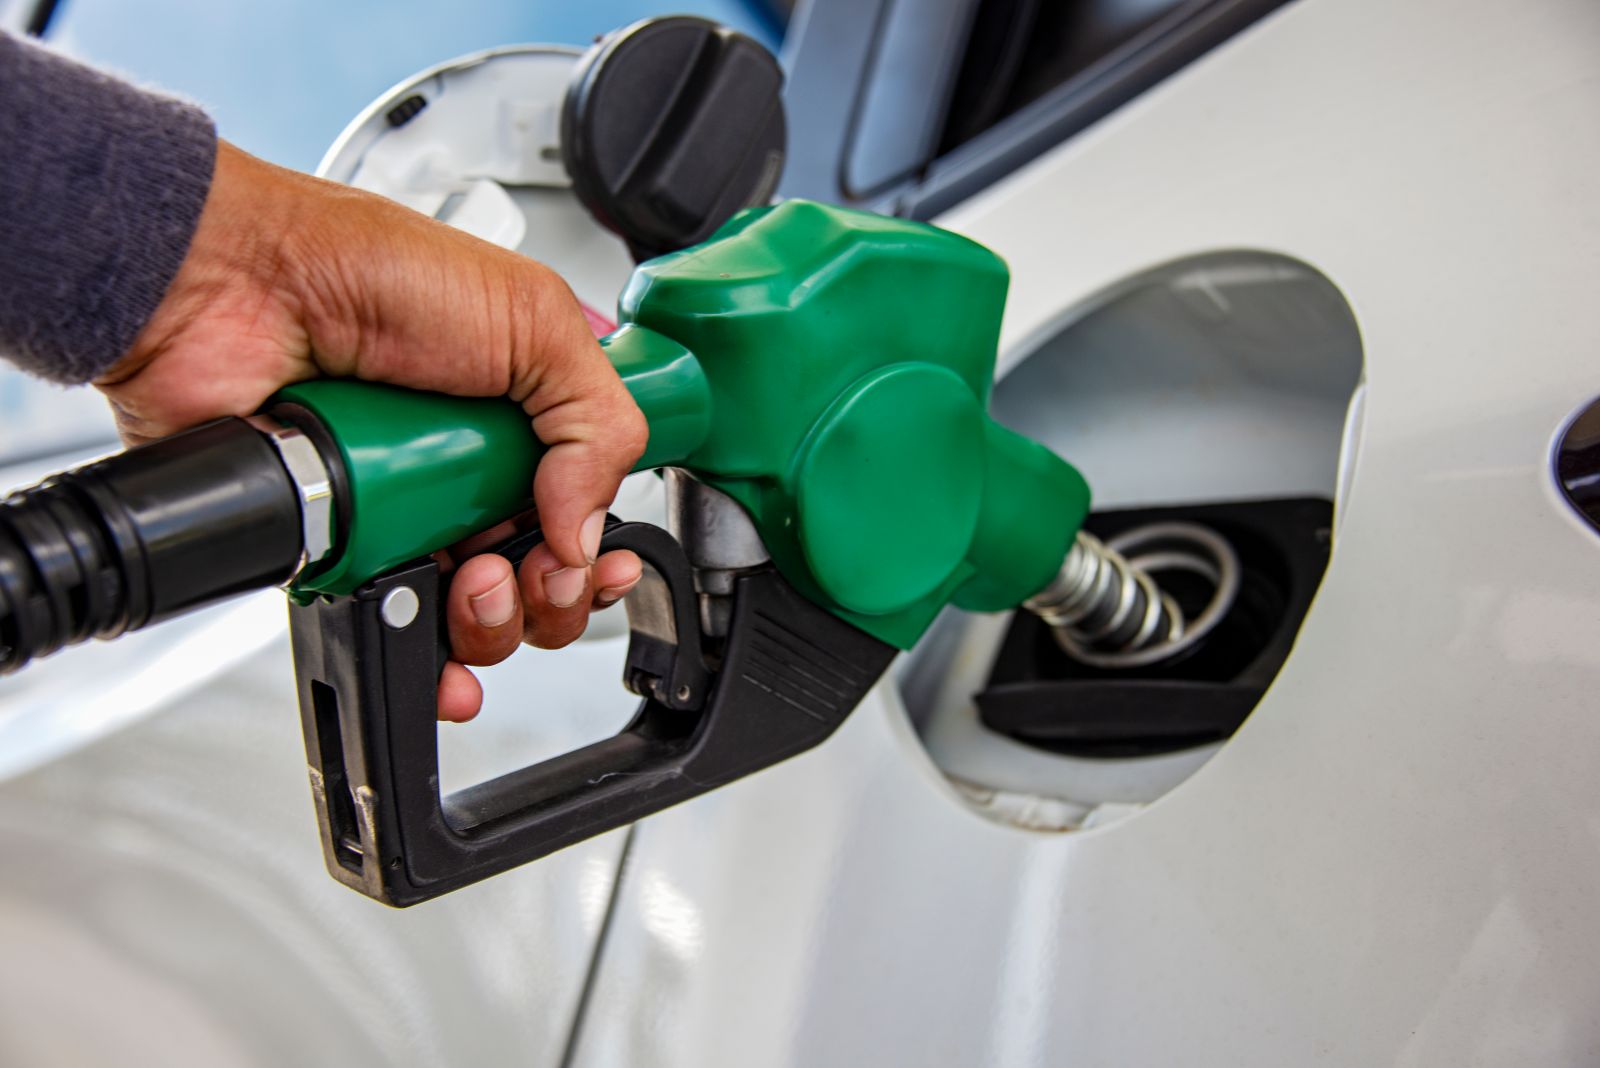 Oil - Pumping desiel into a car by Supawadee56 via Shutterstock